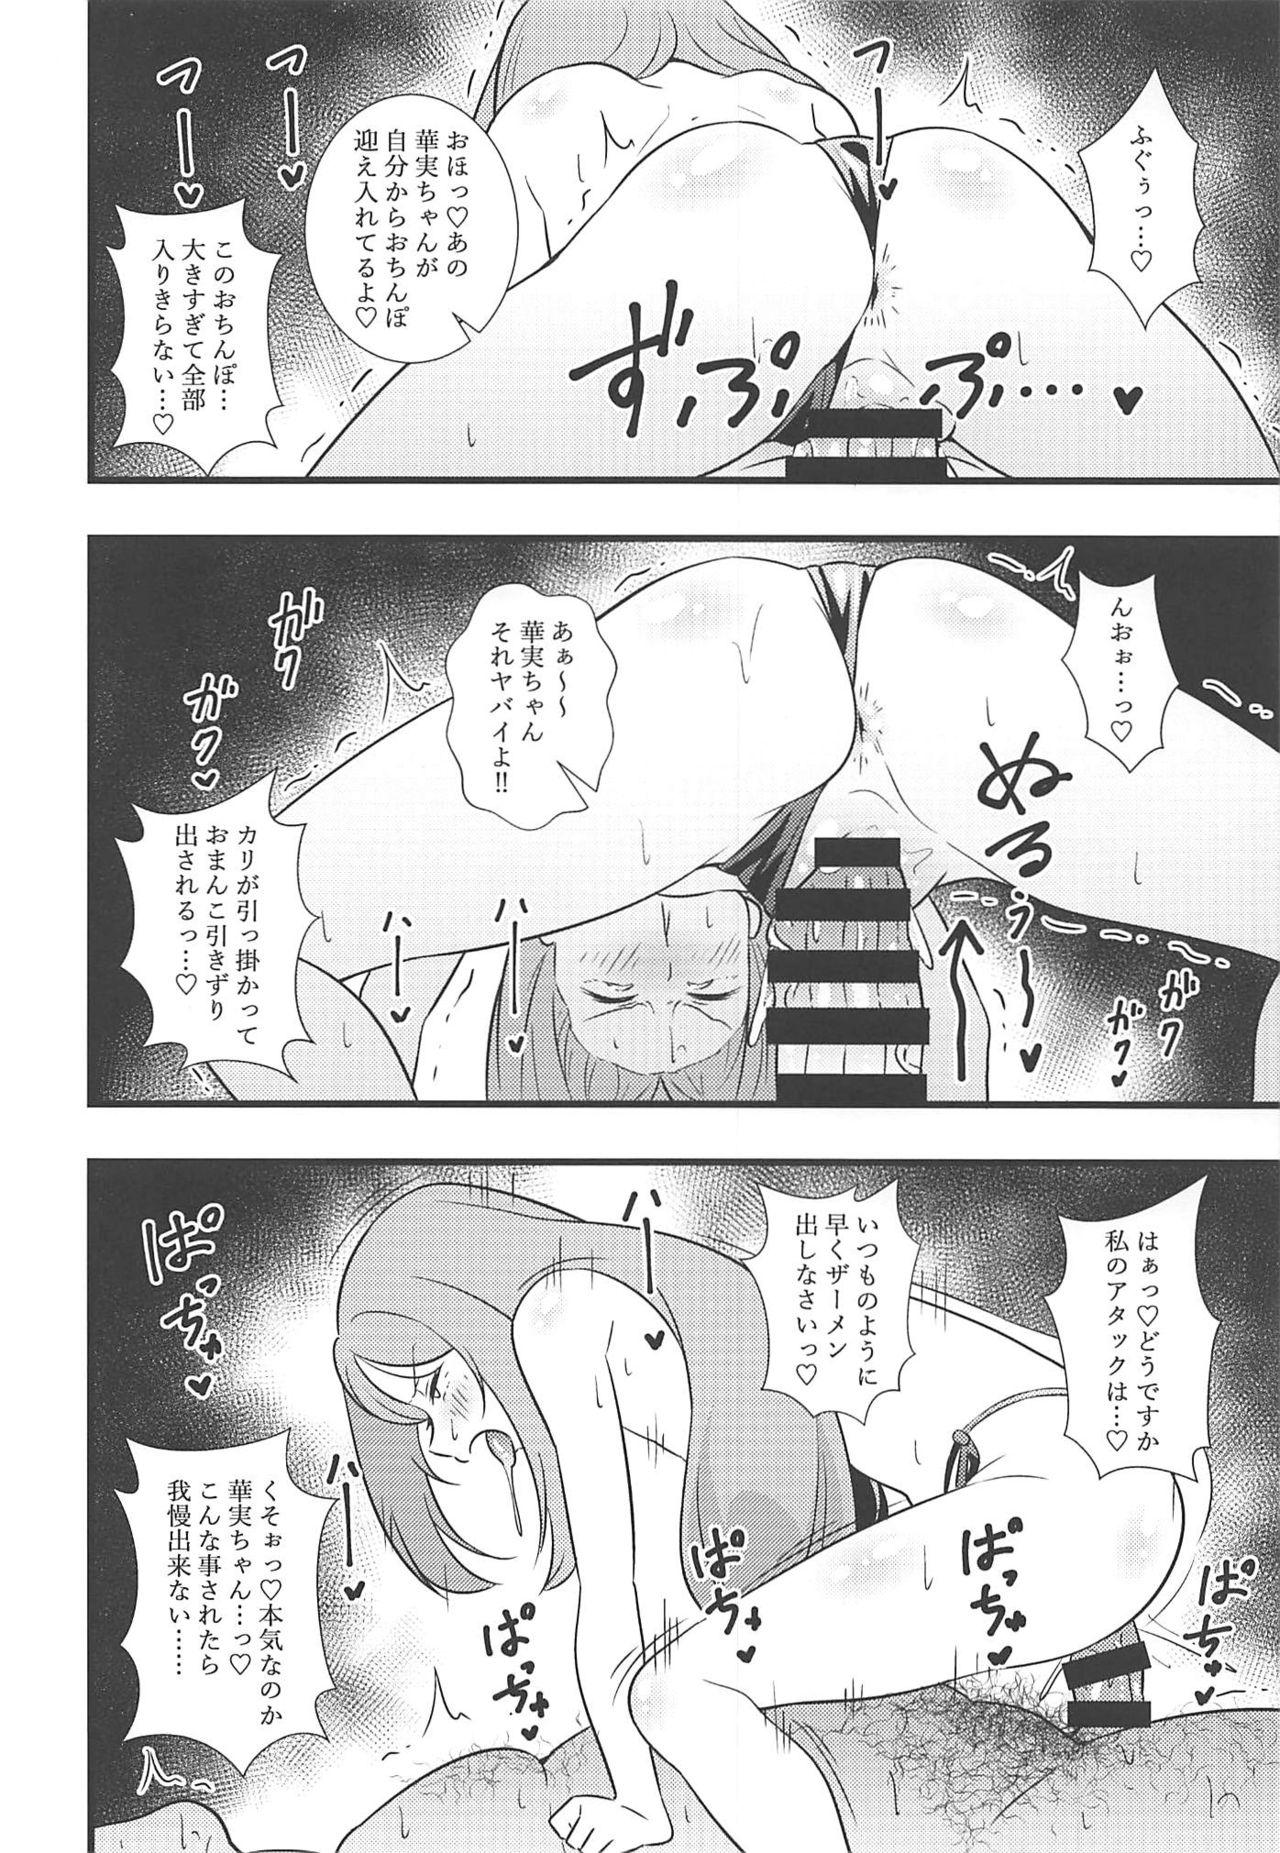 Orgia Shouten! Harame Ore no Ragna Rock!! Risei ga Buttobu made Tanetsuke Rape - Battle spirits Amateurs Gone Wild - Page 11